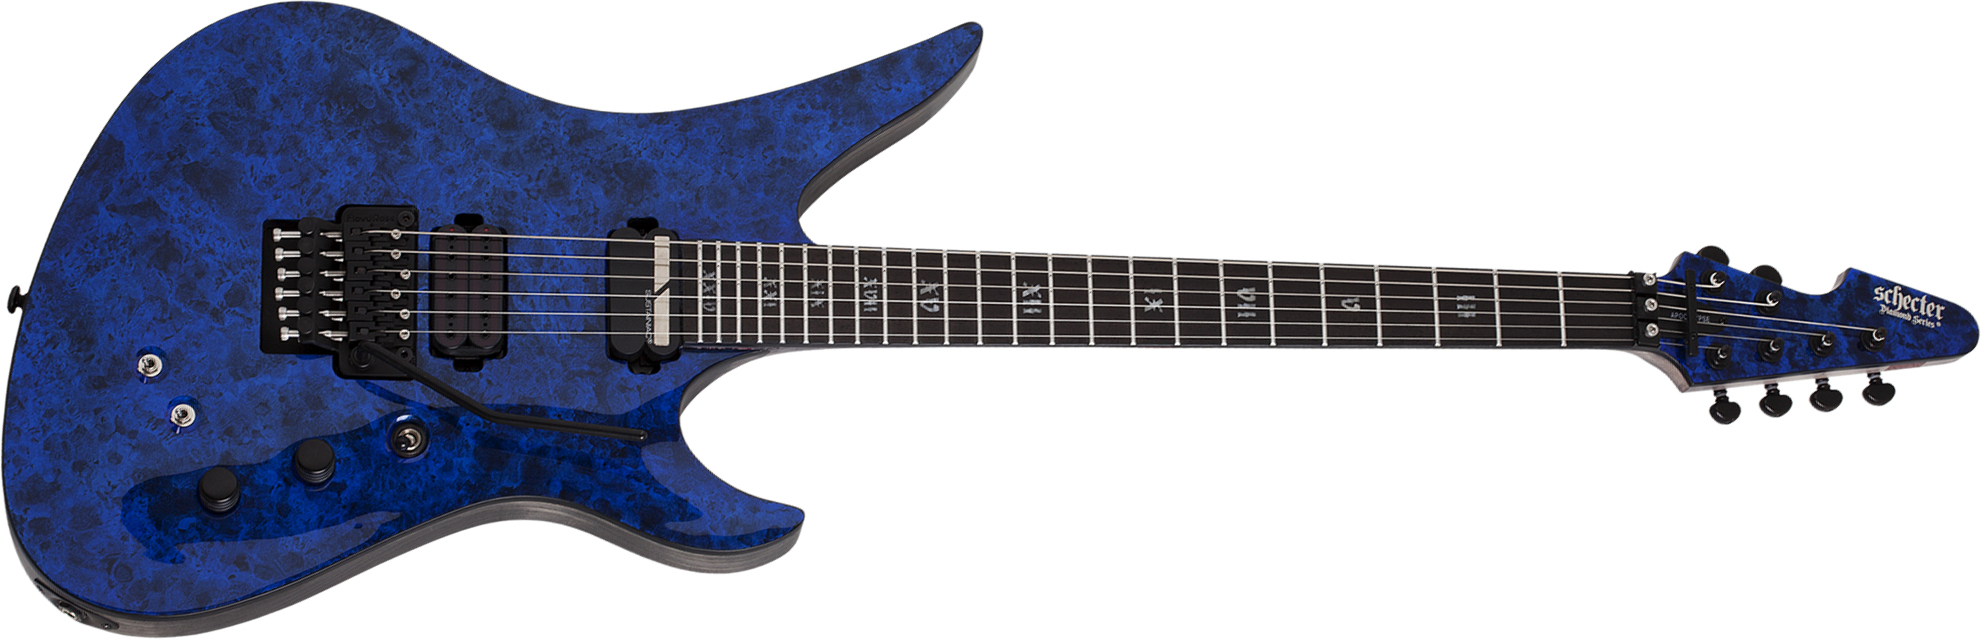 Schecter Avenger Apocalypse Fr S 2h Sustainiac Eb - Blue Reign - Metal electric guitar - Main picture